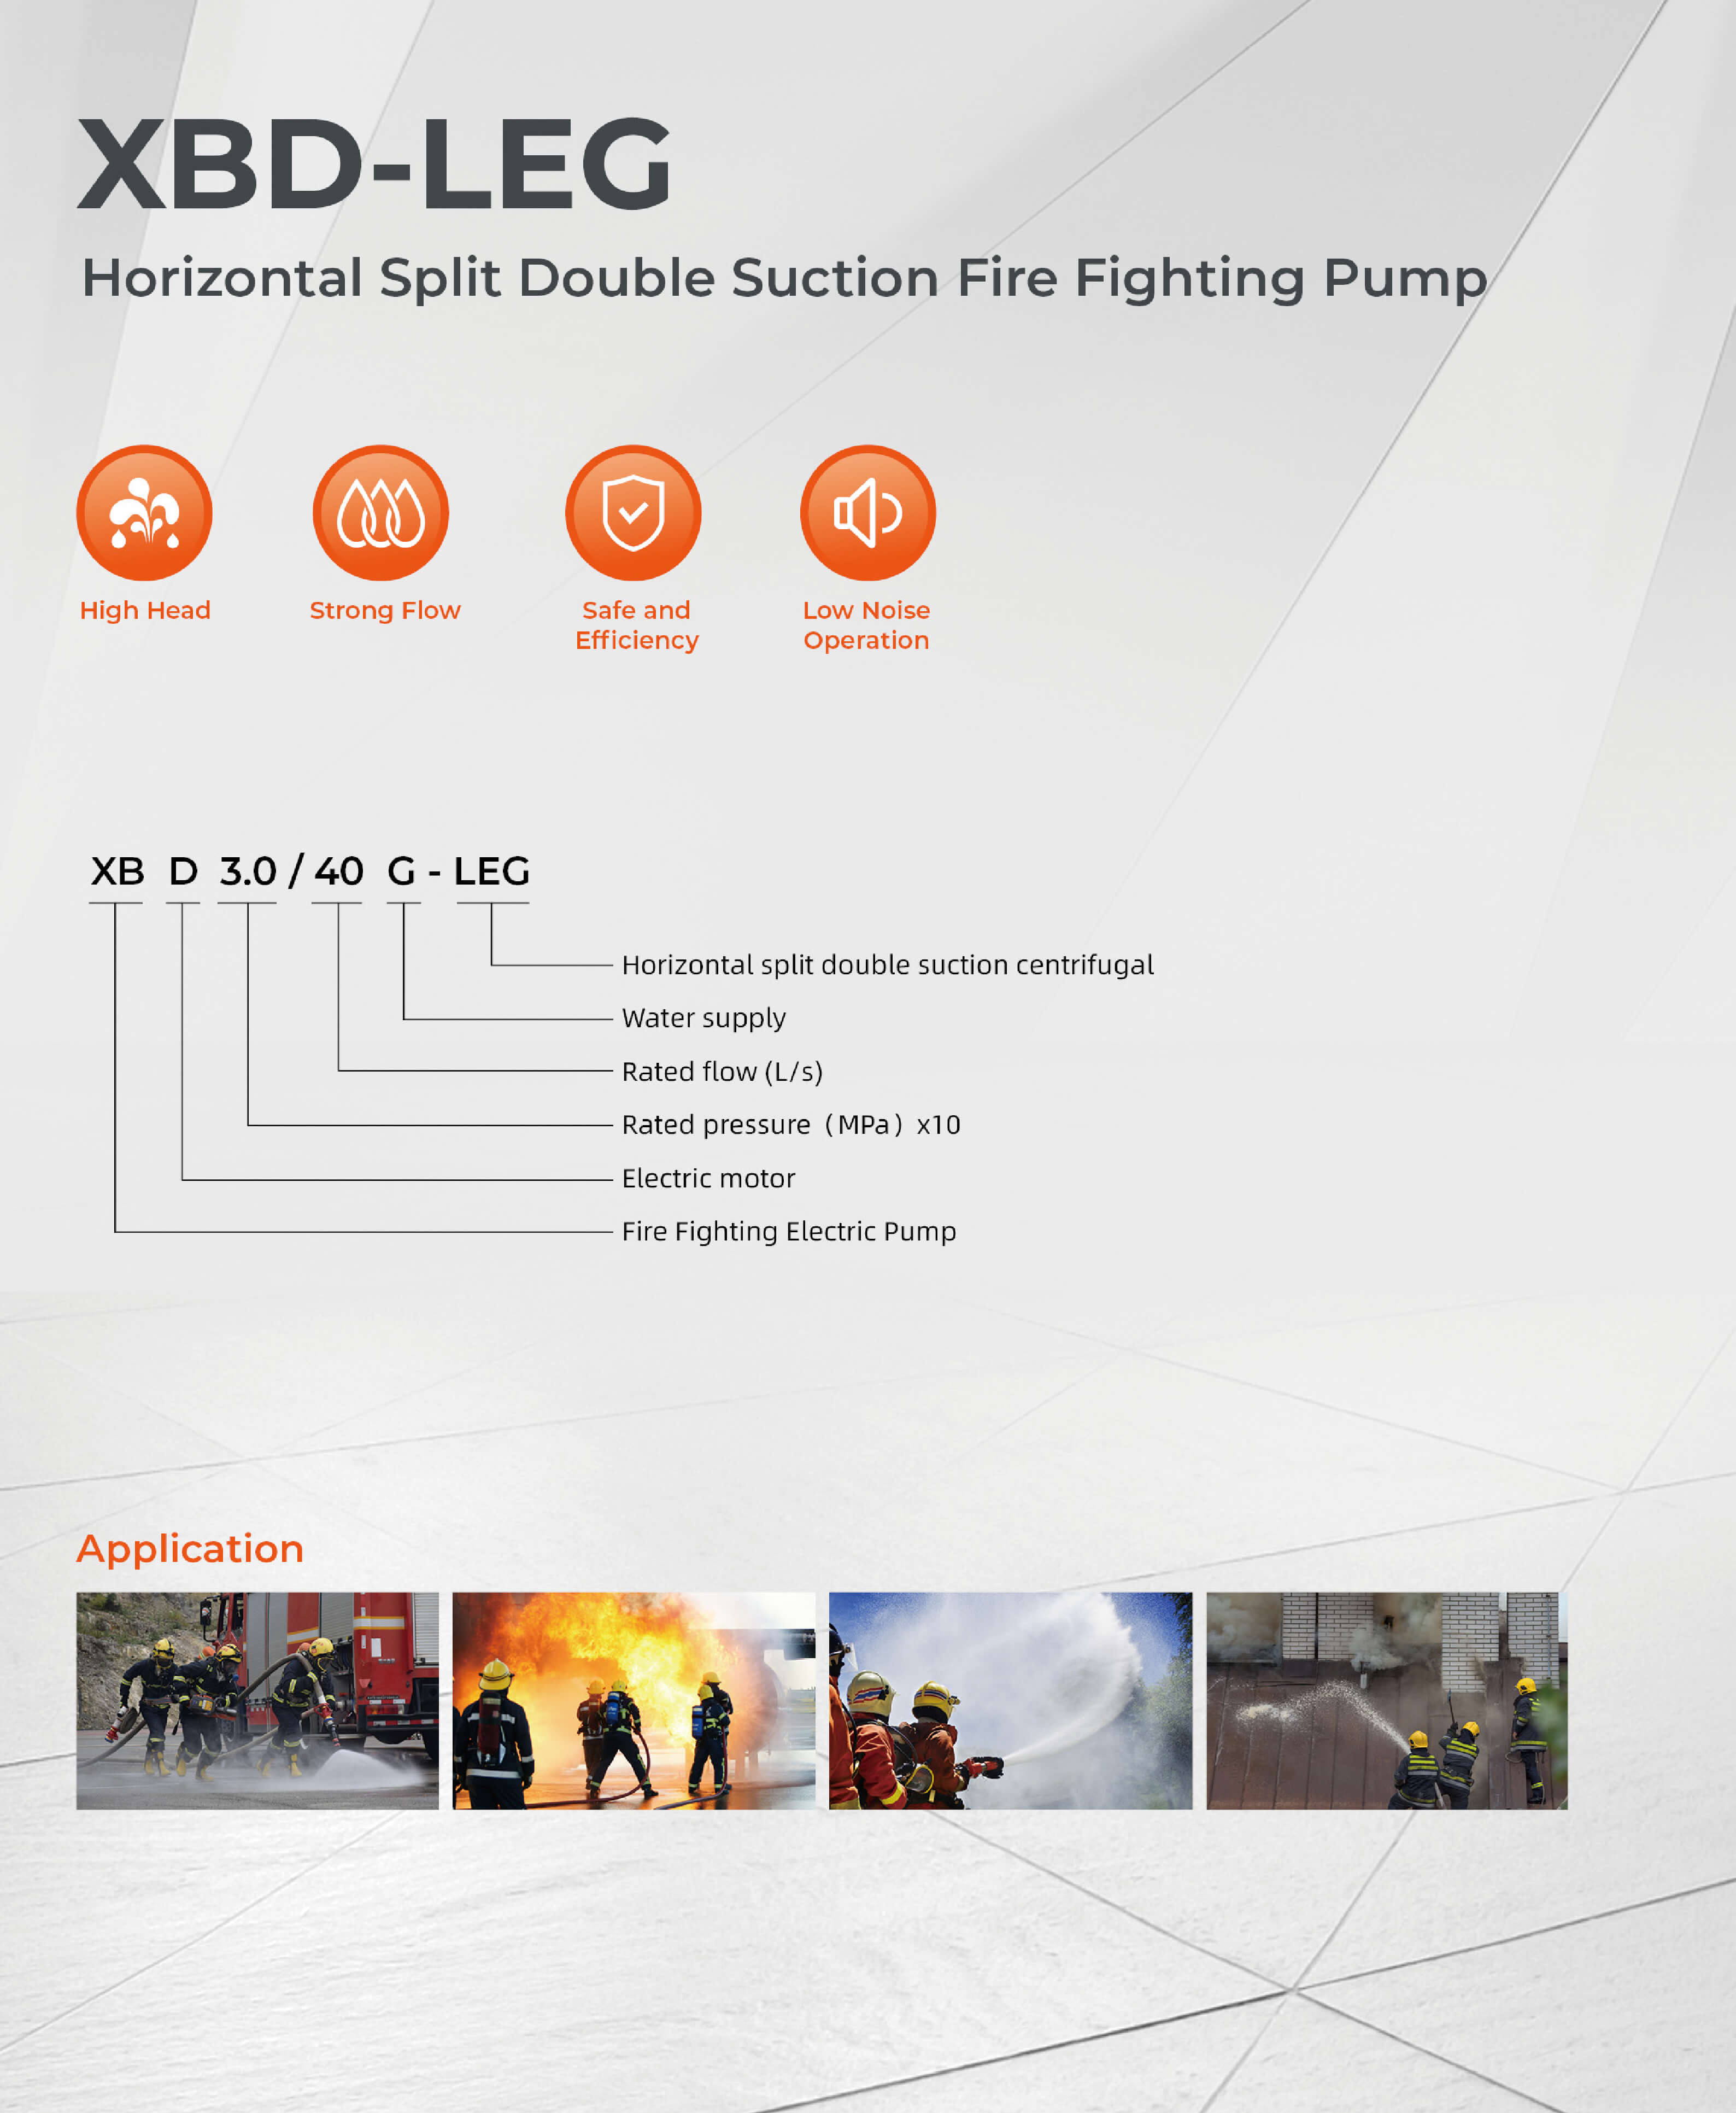 XBD-LEG Horizontal Split Double Suction Fire Fighting Pump Features